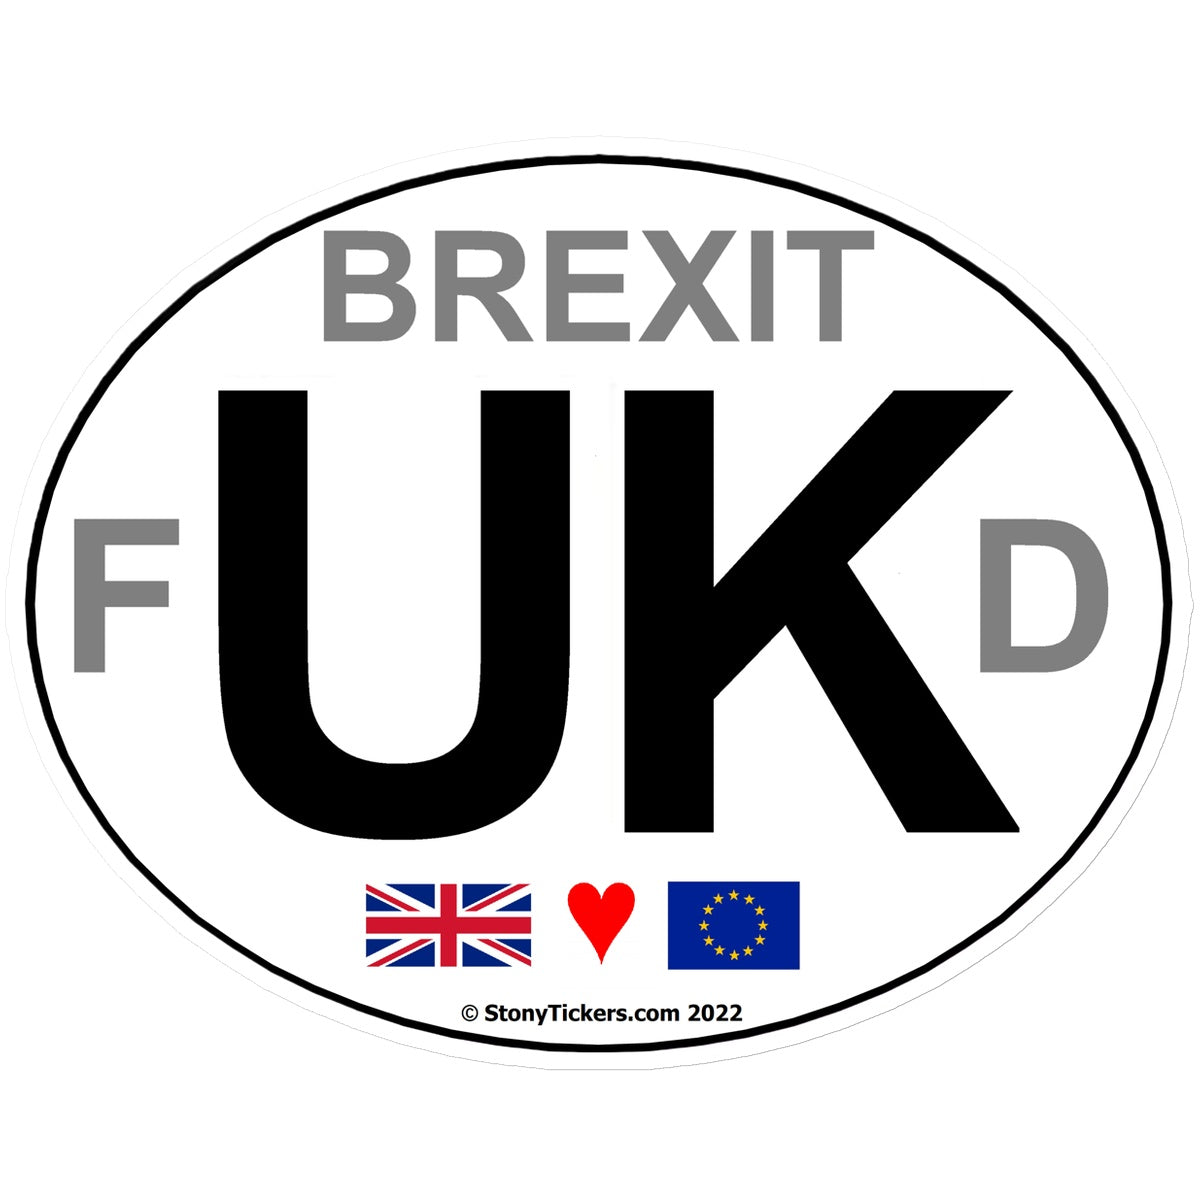 Brexit fUKd Car Sticker